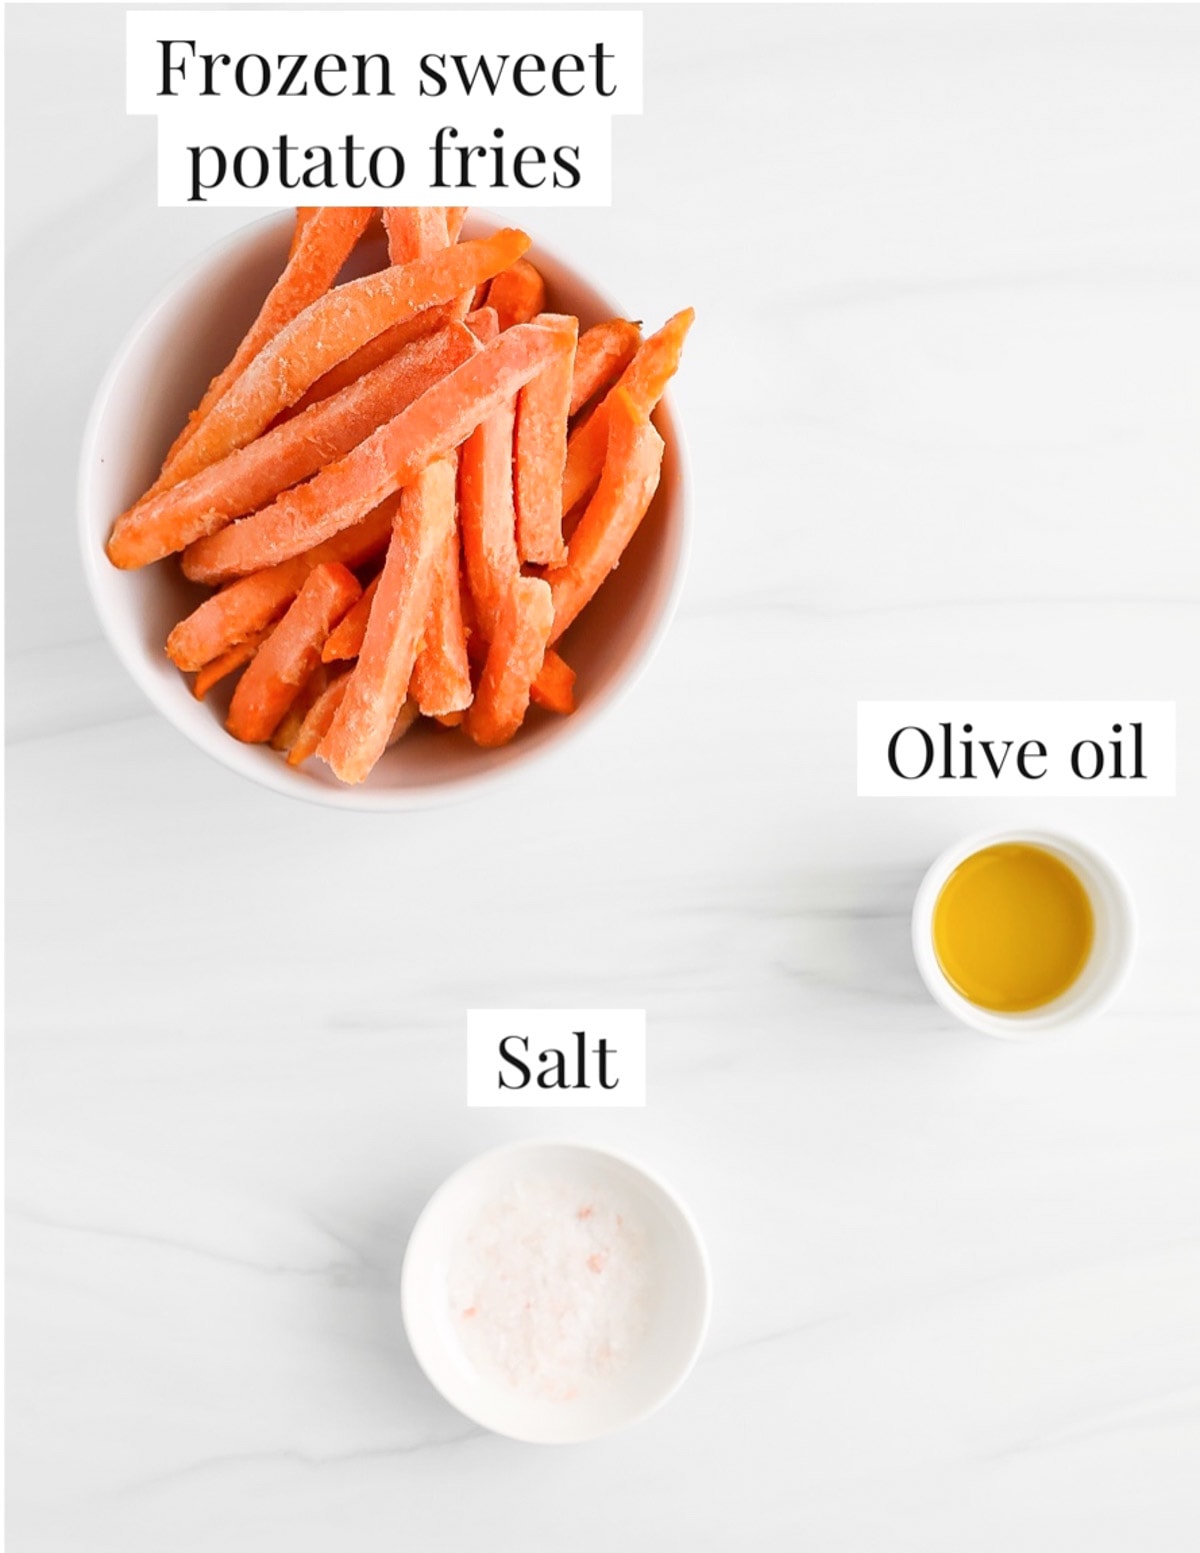 Ingredients in white bowls including: frozen sweet potato fries, olive oil, salt.